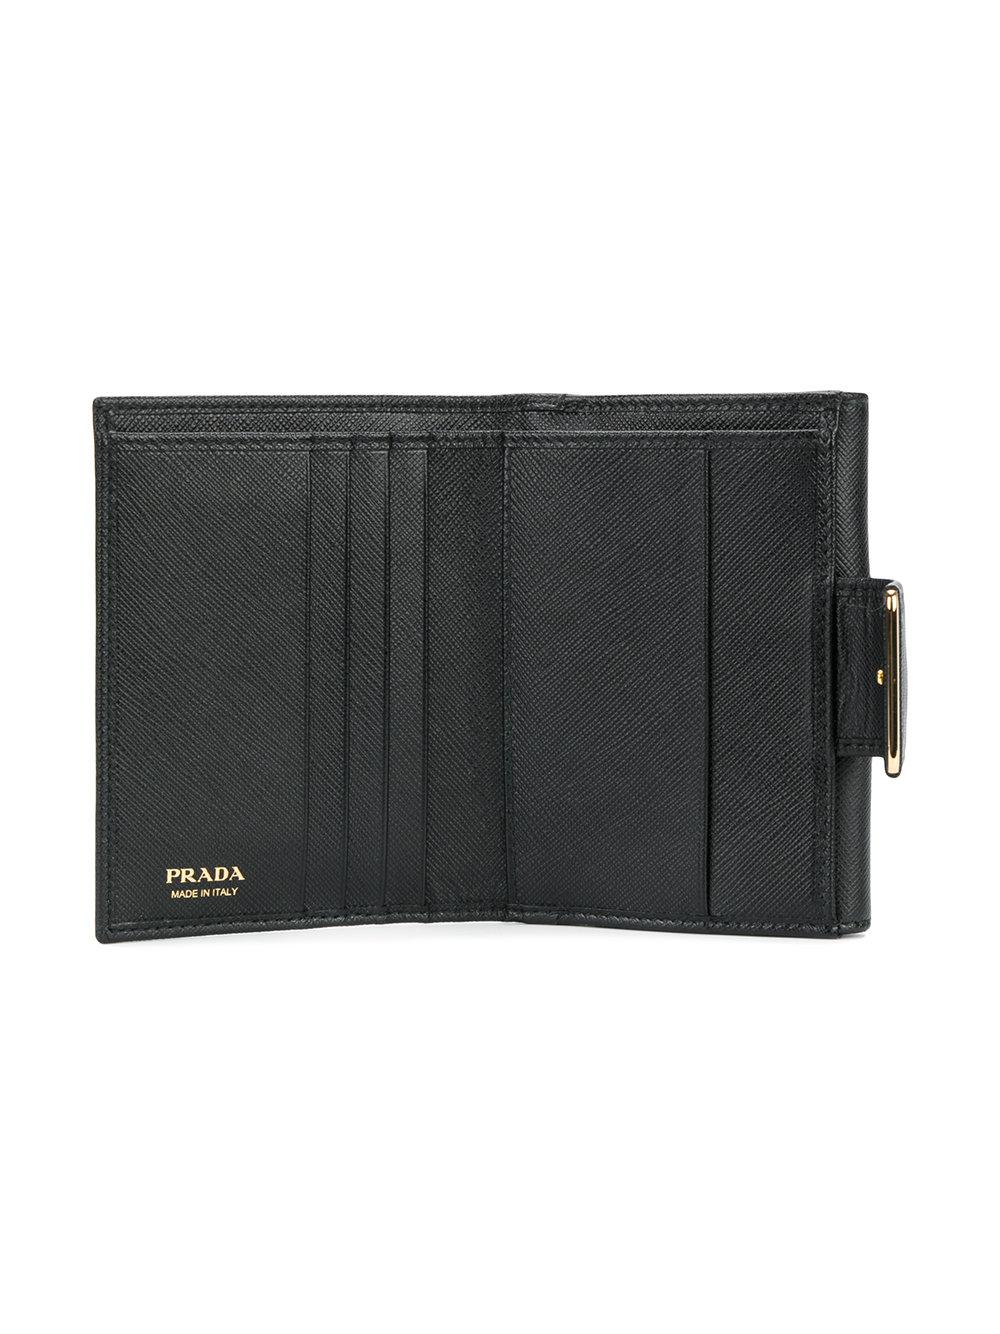 Prada Leather Trifold Flap Wallet in Black - Lyst